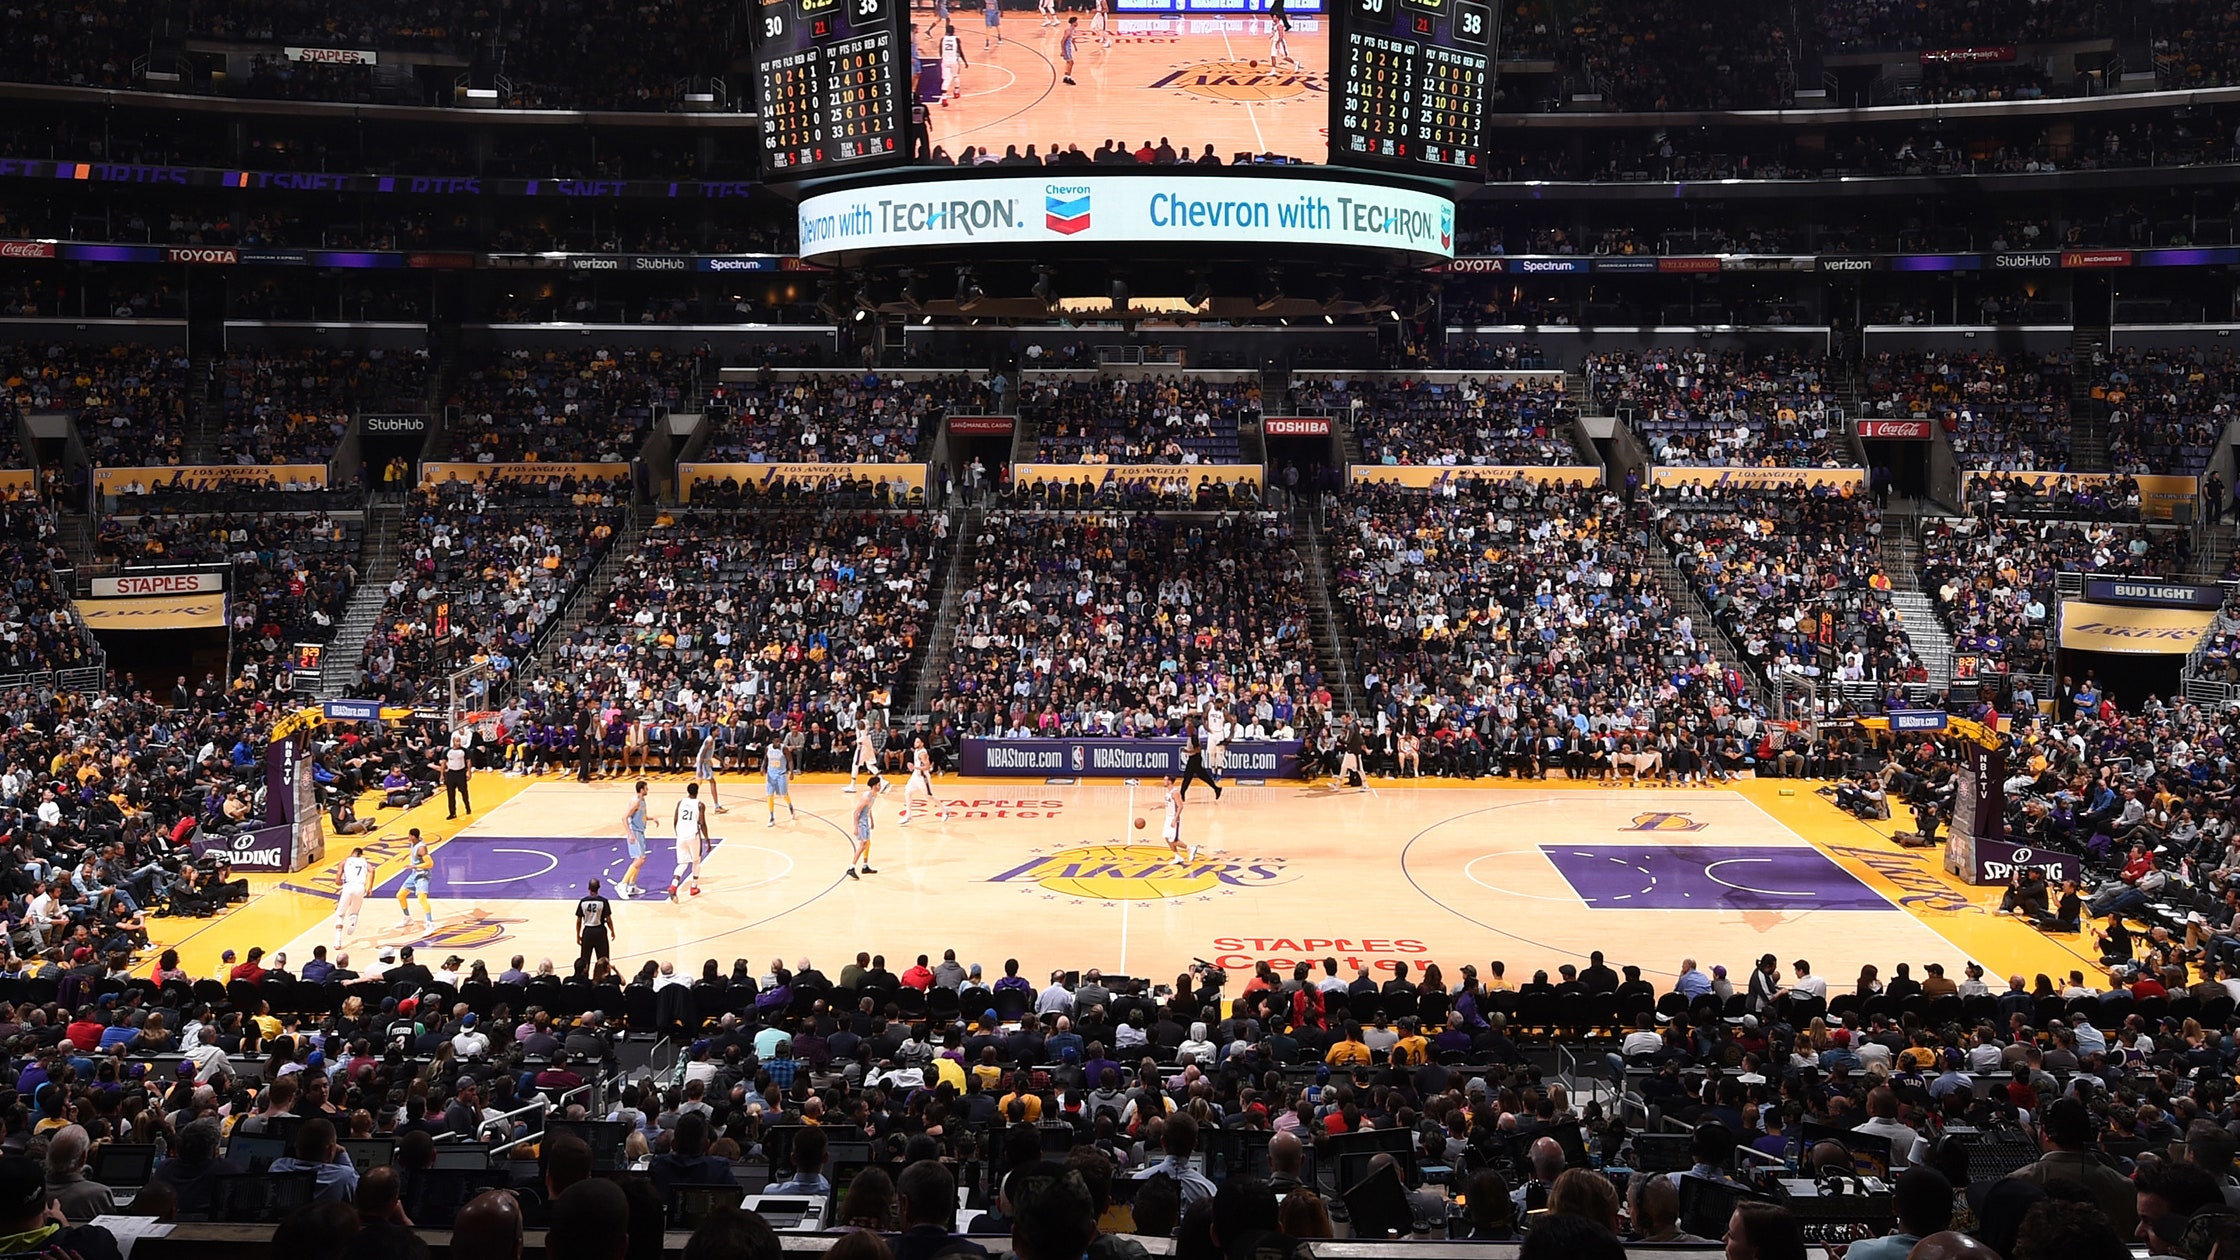 NBA: DEC 25 Cavaliers at Lakers